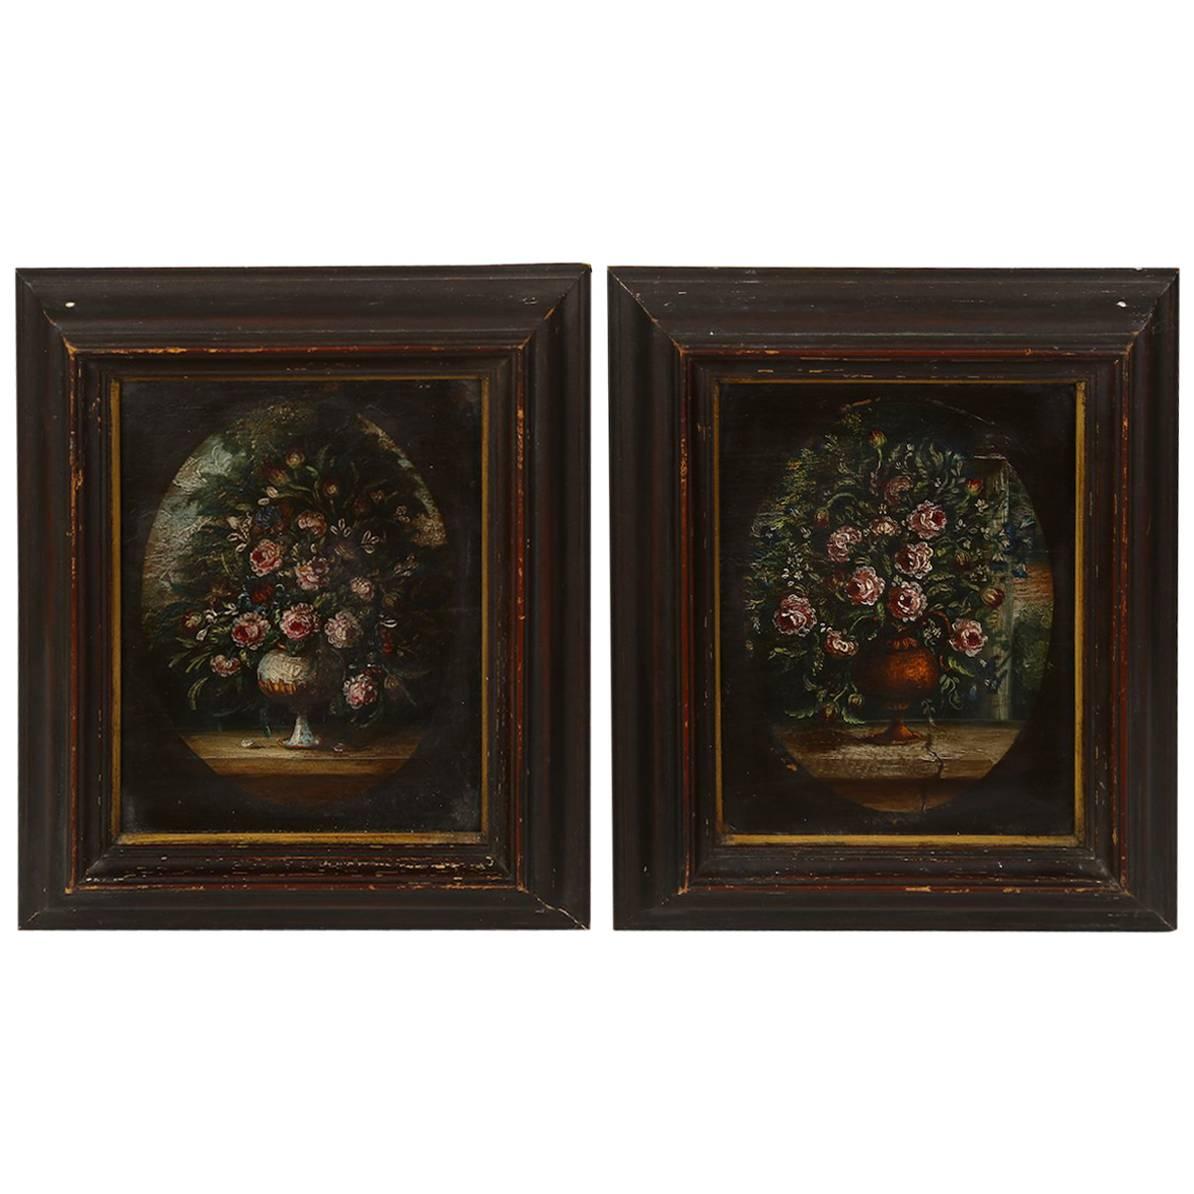 Two Similar Still Lifes, Floral Motive, Italian, Late 19th Century